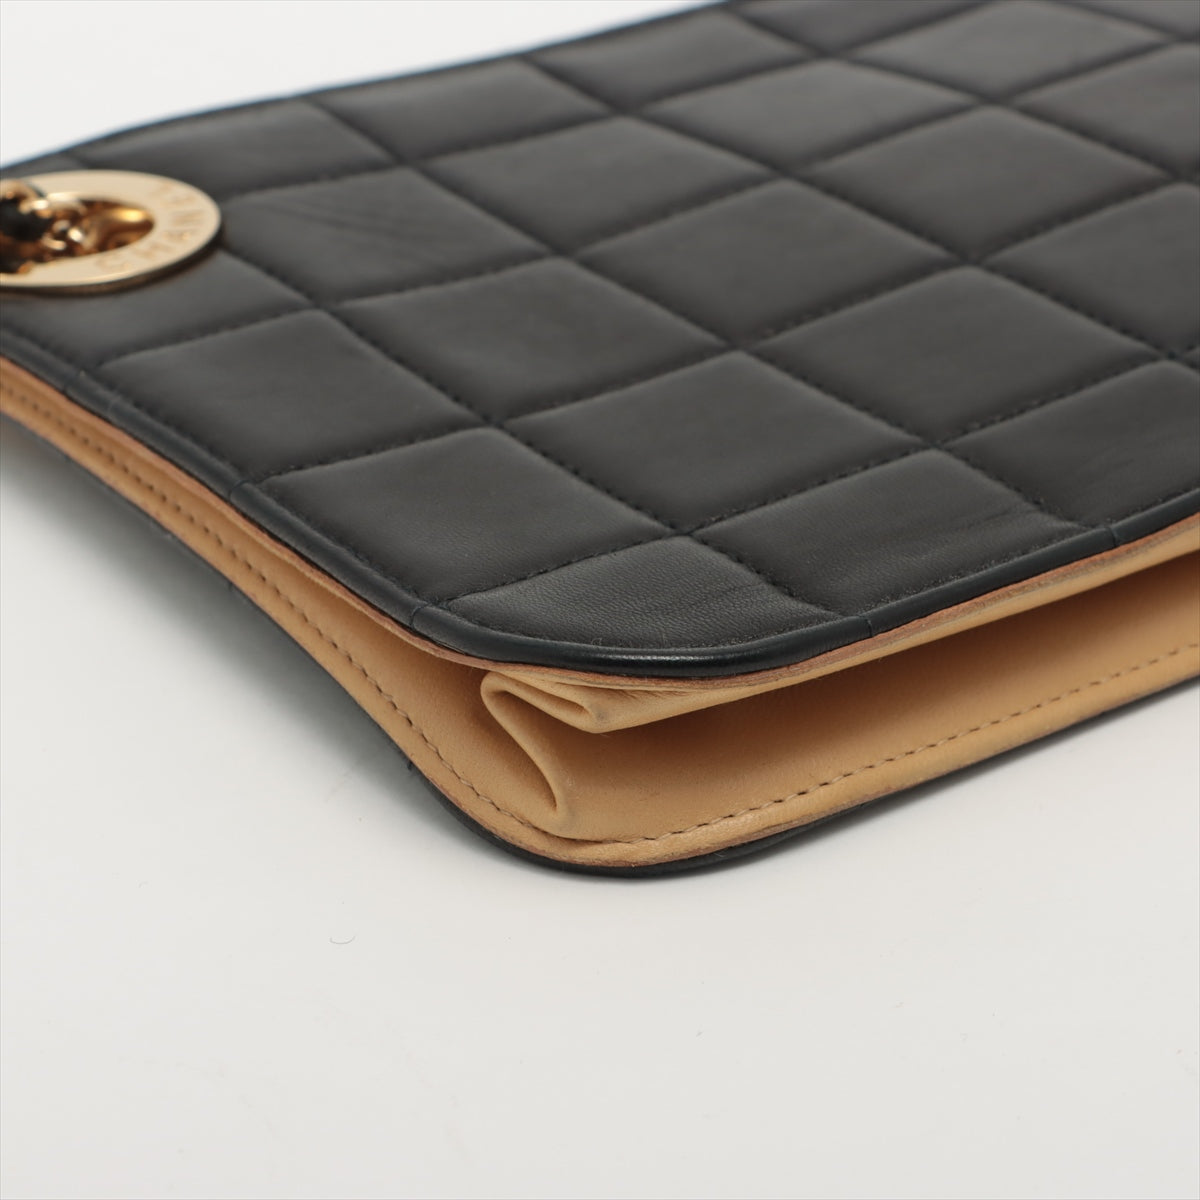 Chanel Chocolate Bar Lambskin Clutch Bag Black Gold Metal Fittings 7XXXXXX